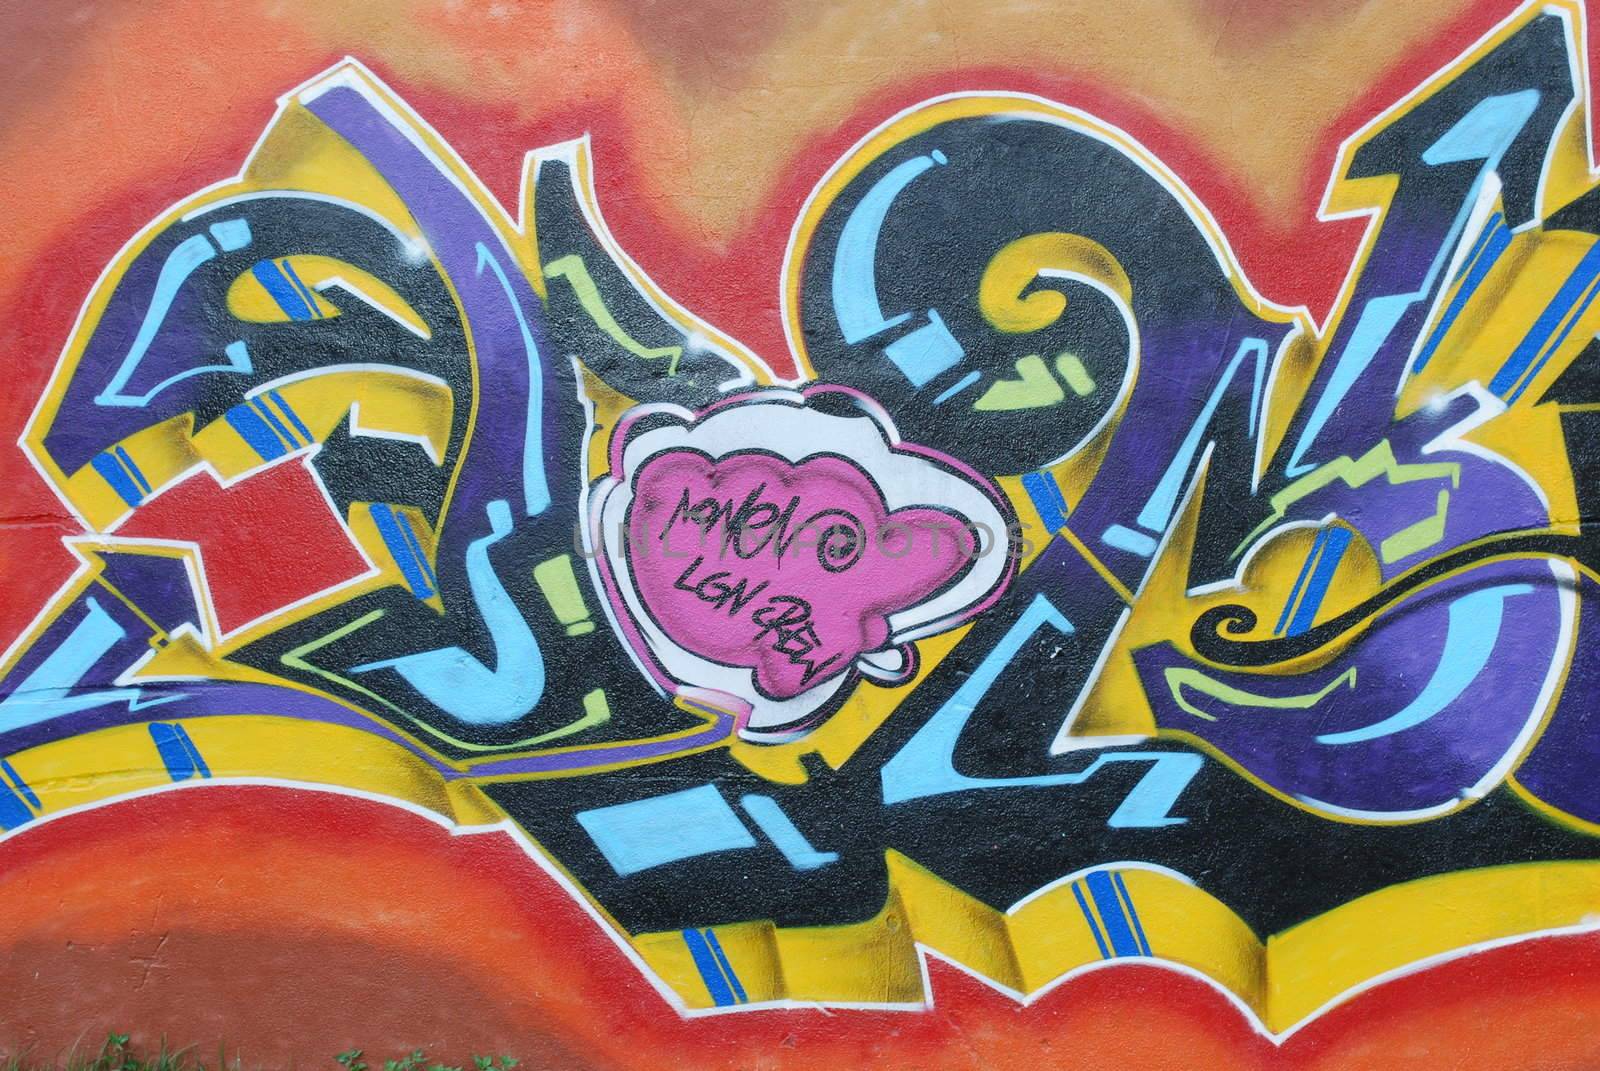 Graffiti wall by luissantos84